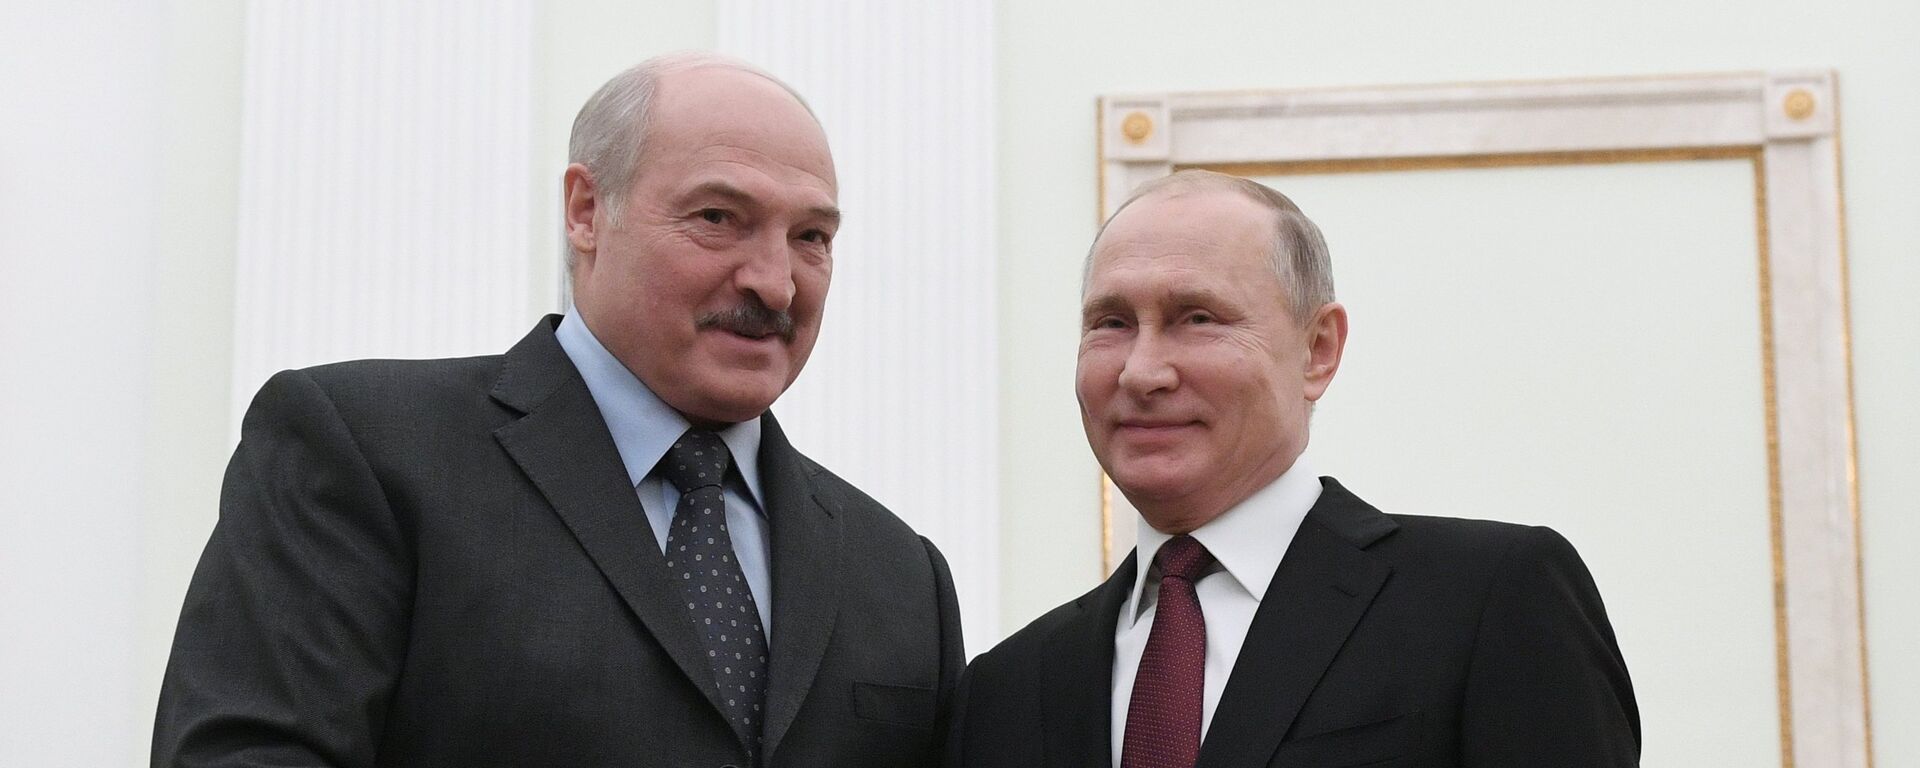 Predsednik Rusije Vladimir Putin i predsednik Belorusije Aleksandar Lukašenko - Sputnik Srbija, 1920, 29.12.2018